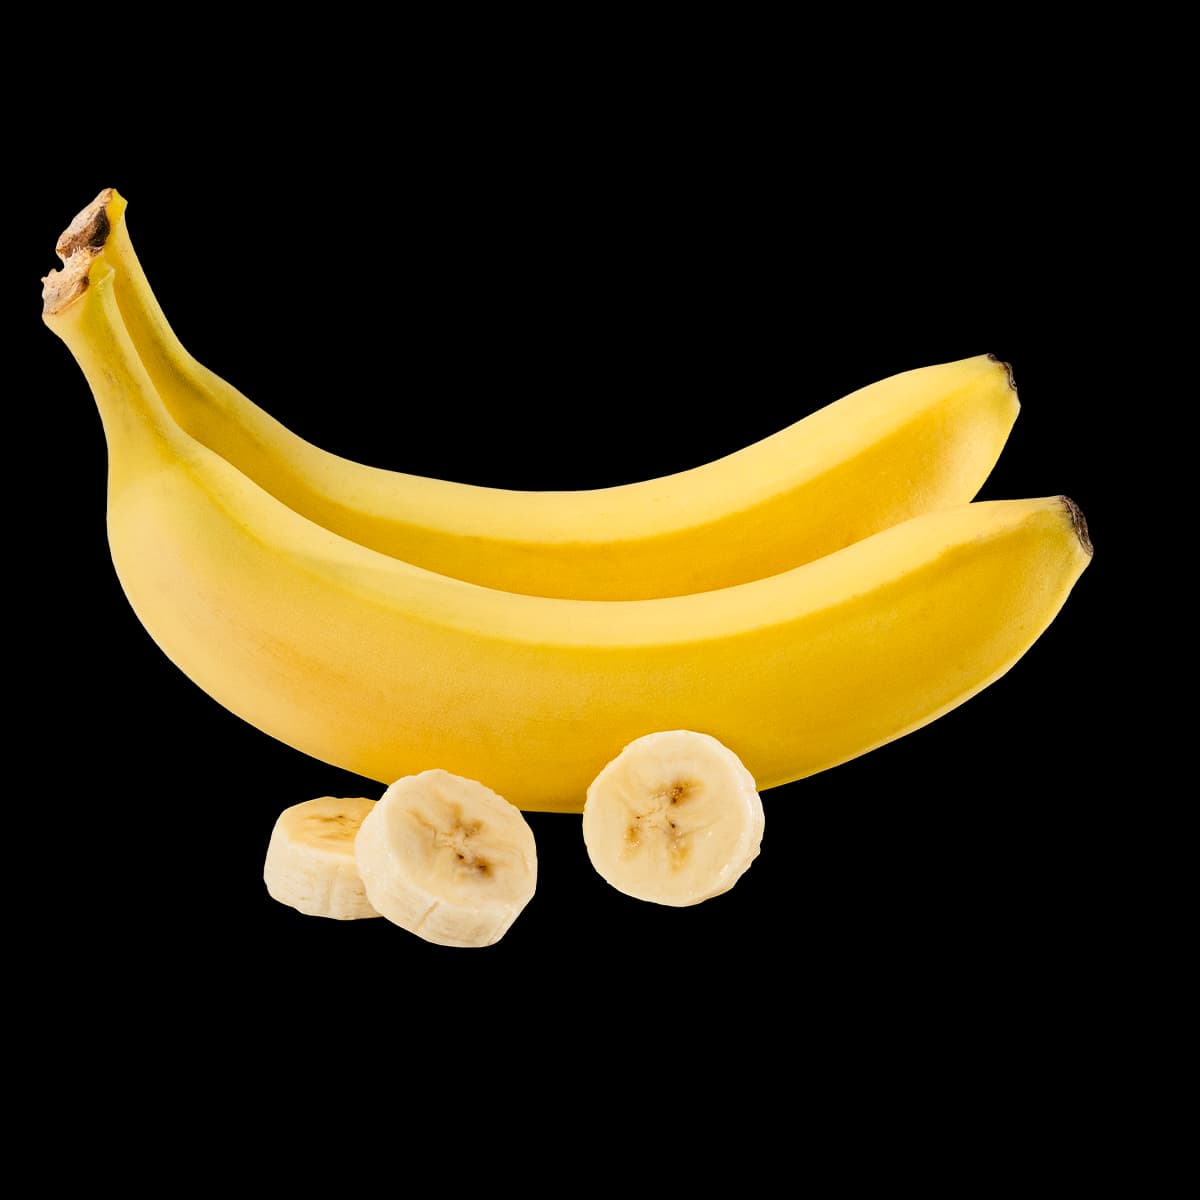 Chiquita Banana with slices